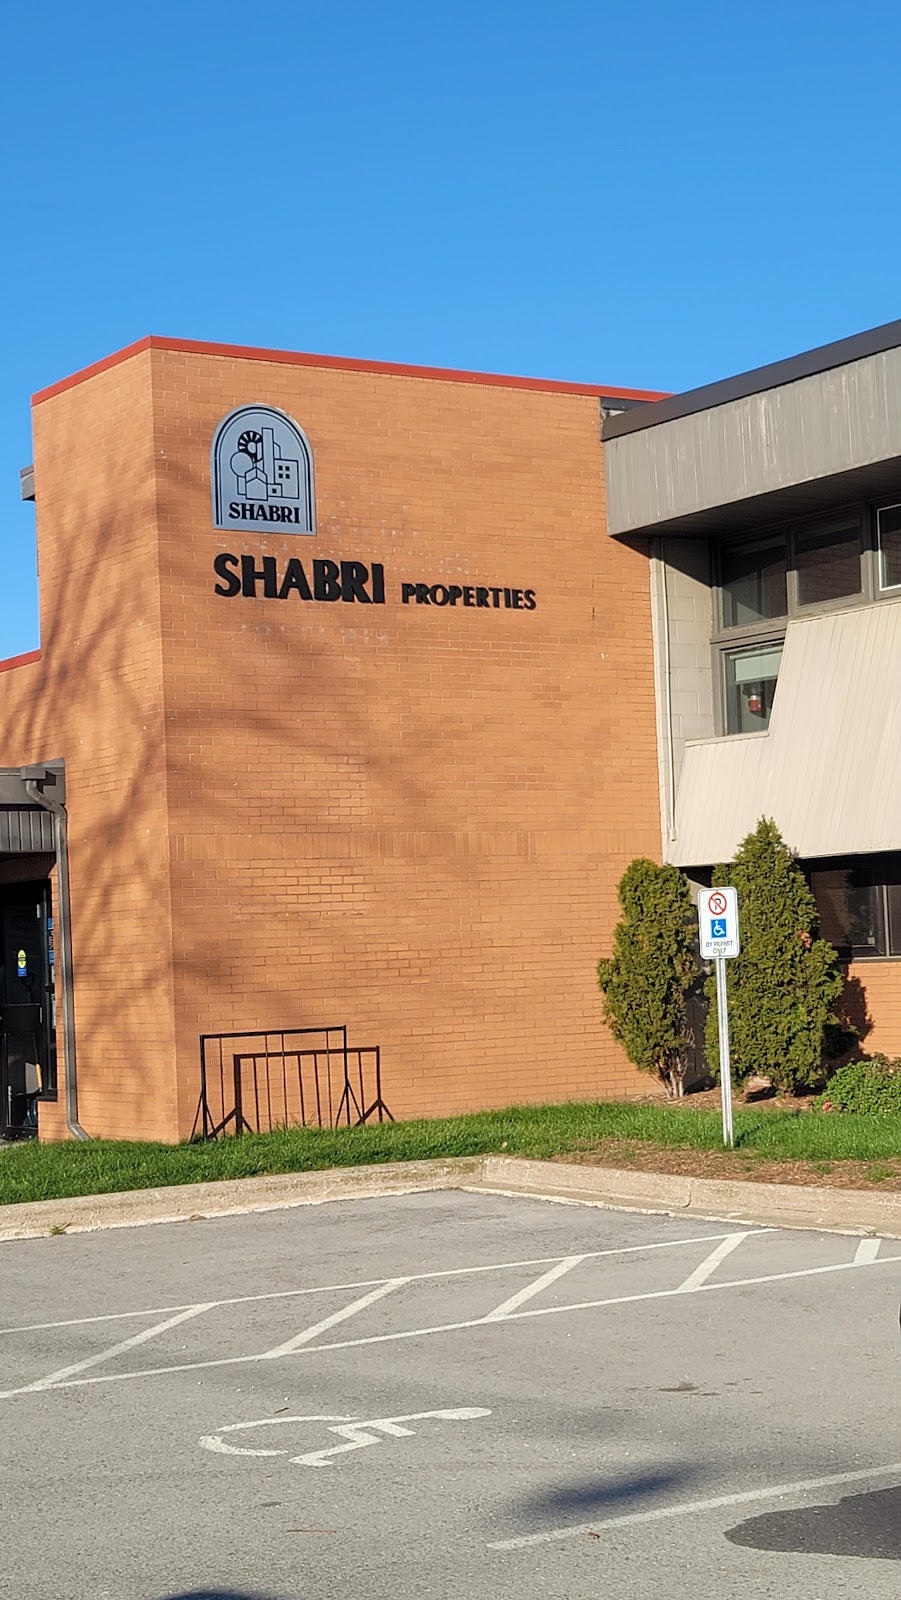 Shabri Properties Limited | 26 Hiscott St, St. Catharines, ON L2R 1C6, Canada | Phone: (905) 684-6333